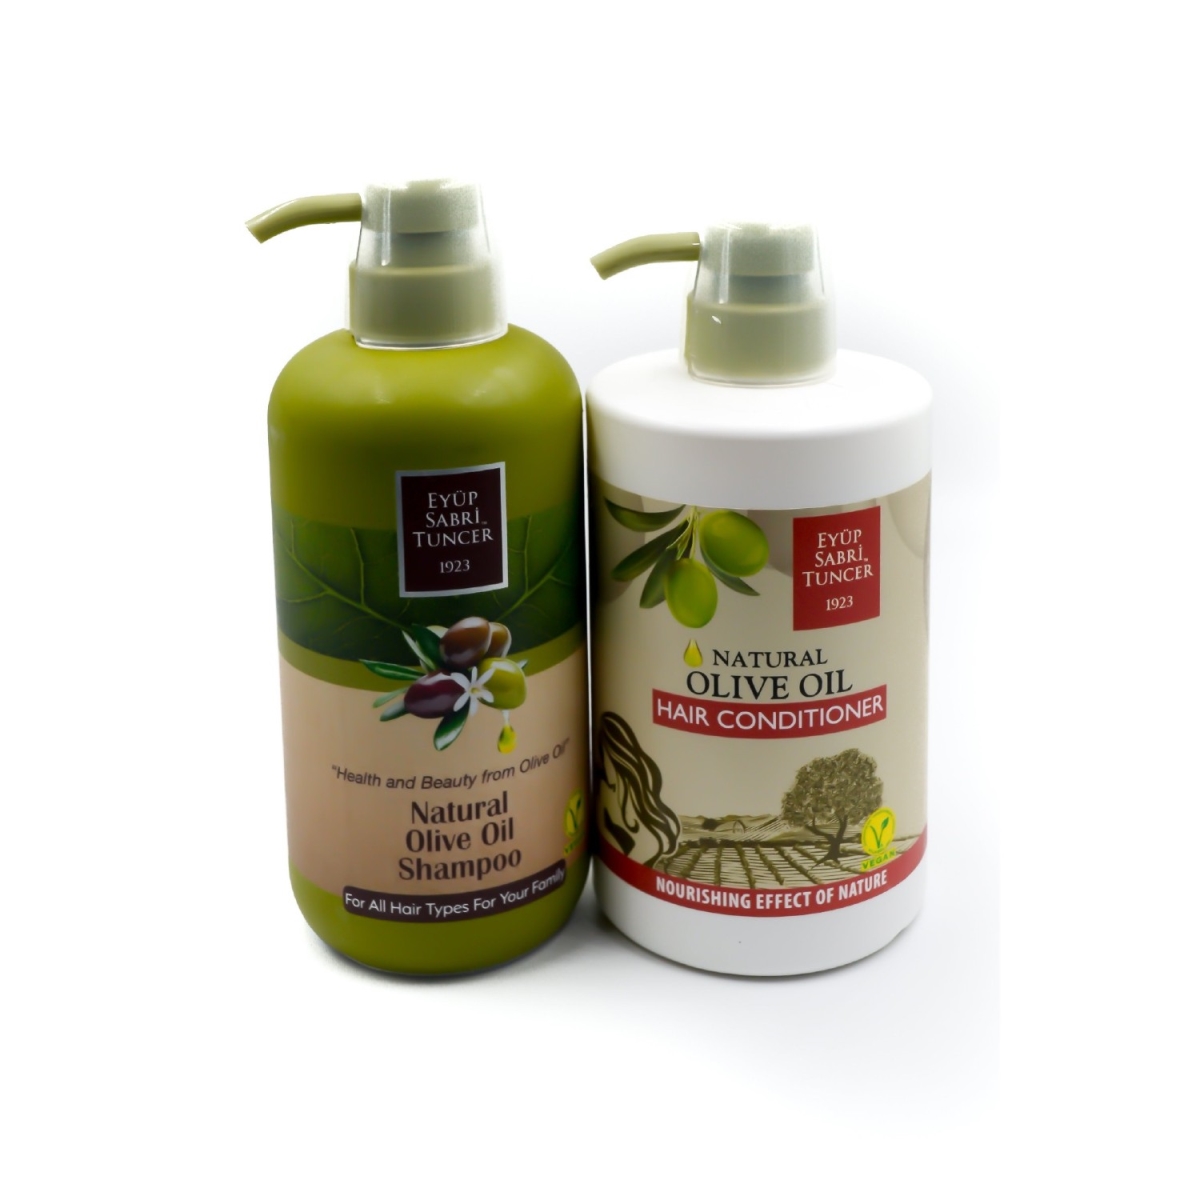 Picture of Eyup Sabri Tuncer EST-COMBO-SHAMPOONCONDITIONER-OLIVOIL-600 Eyup Sabri Tuncer Natural Olive Oil Hair Care Basics Set - Shampoo & Hair Conditioner